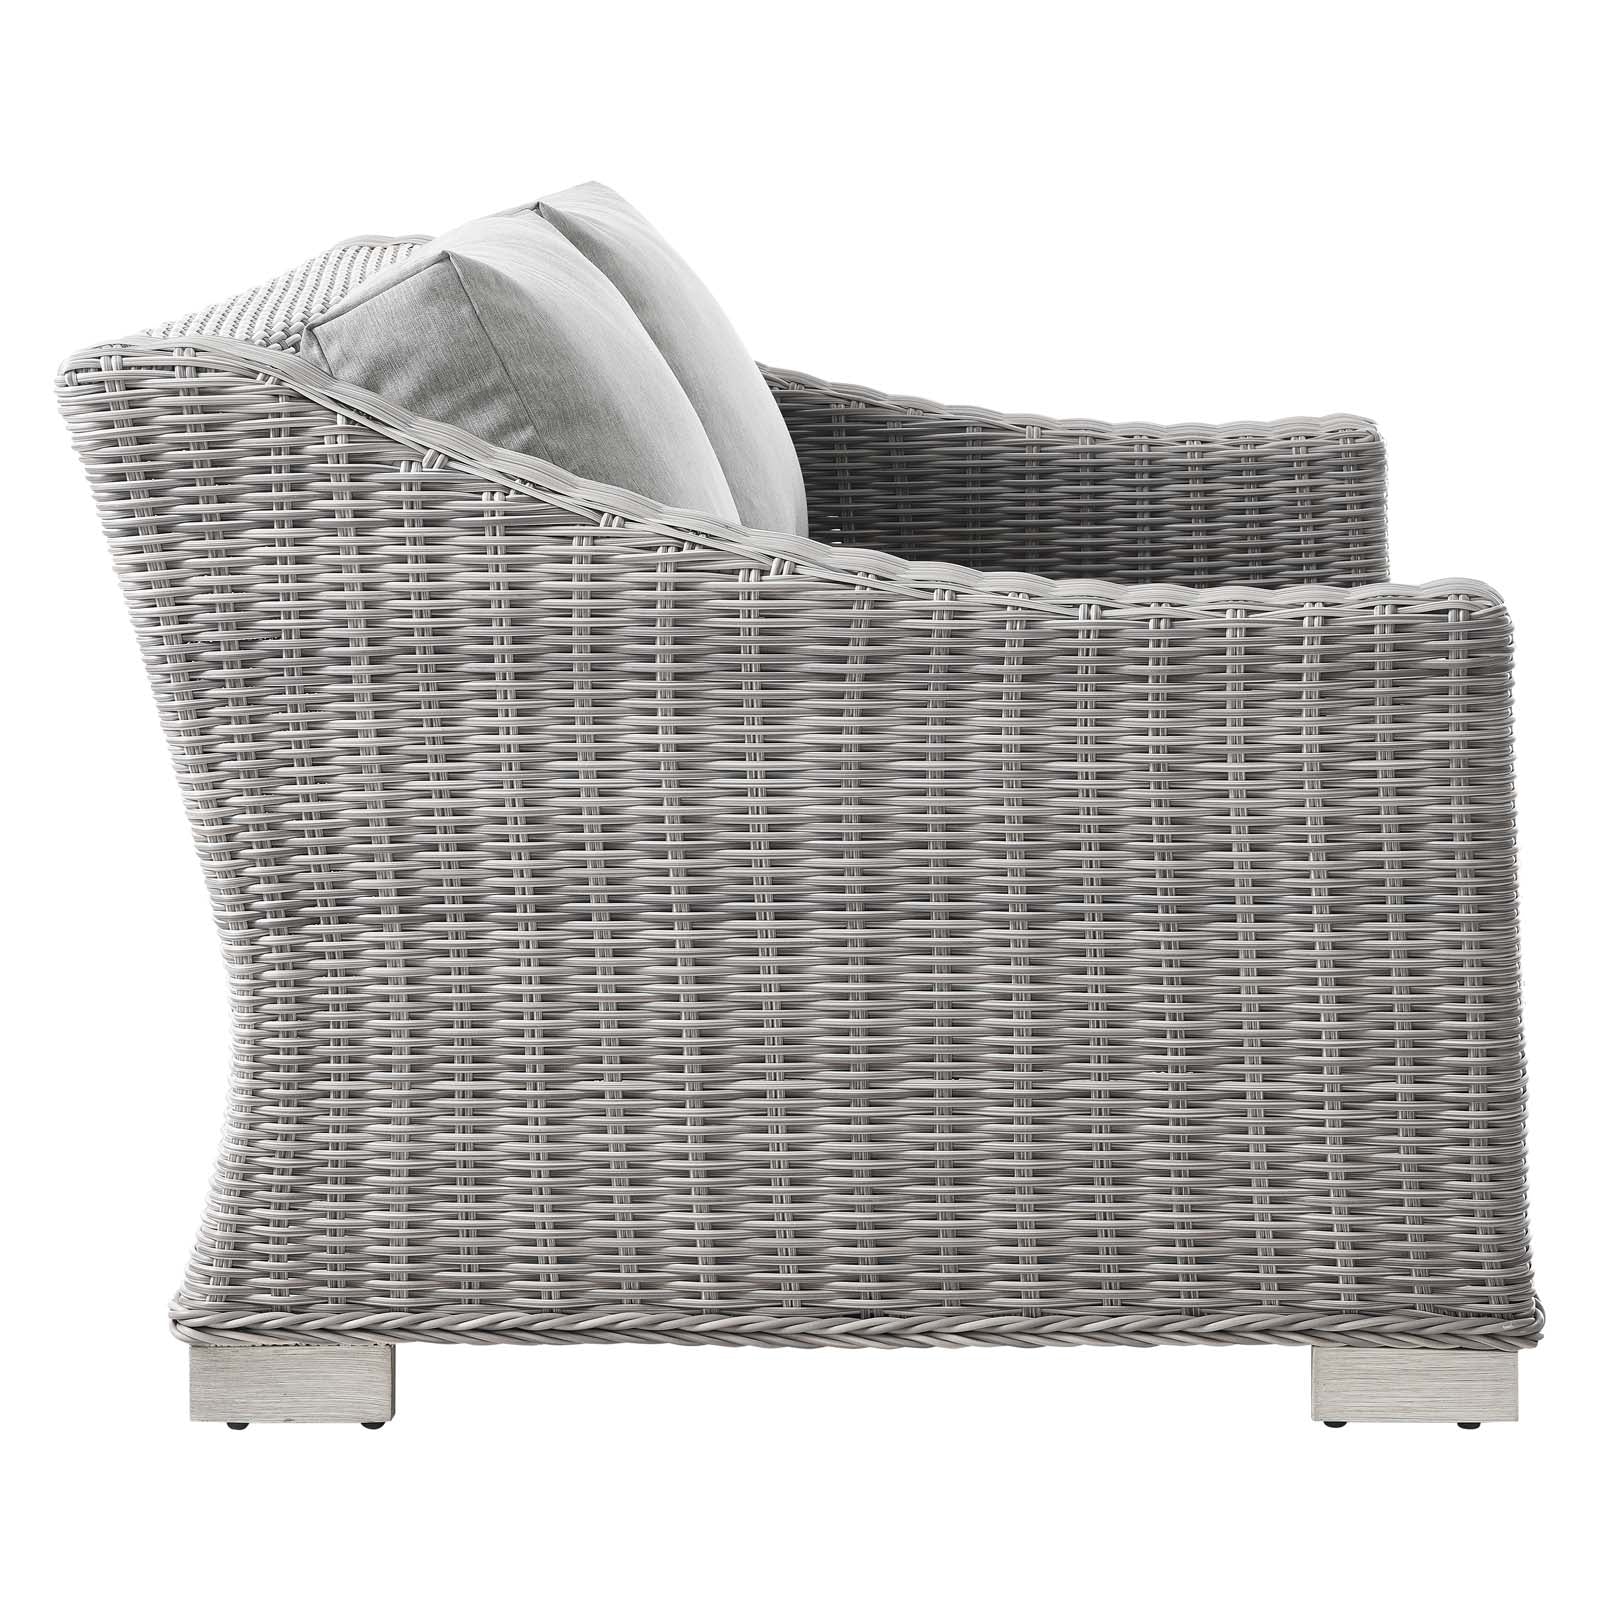 Modway Outdoor Conversation Sets - Conway 4 Piece Outdoor Patio Wicker Rattan Furniture Set Light Gray & Gray 150"